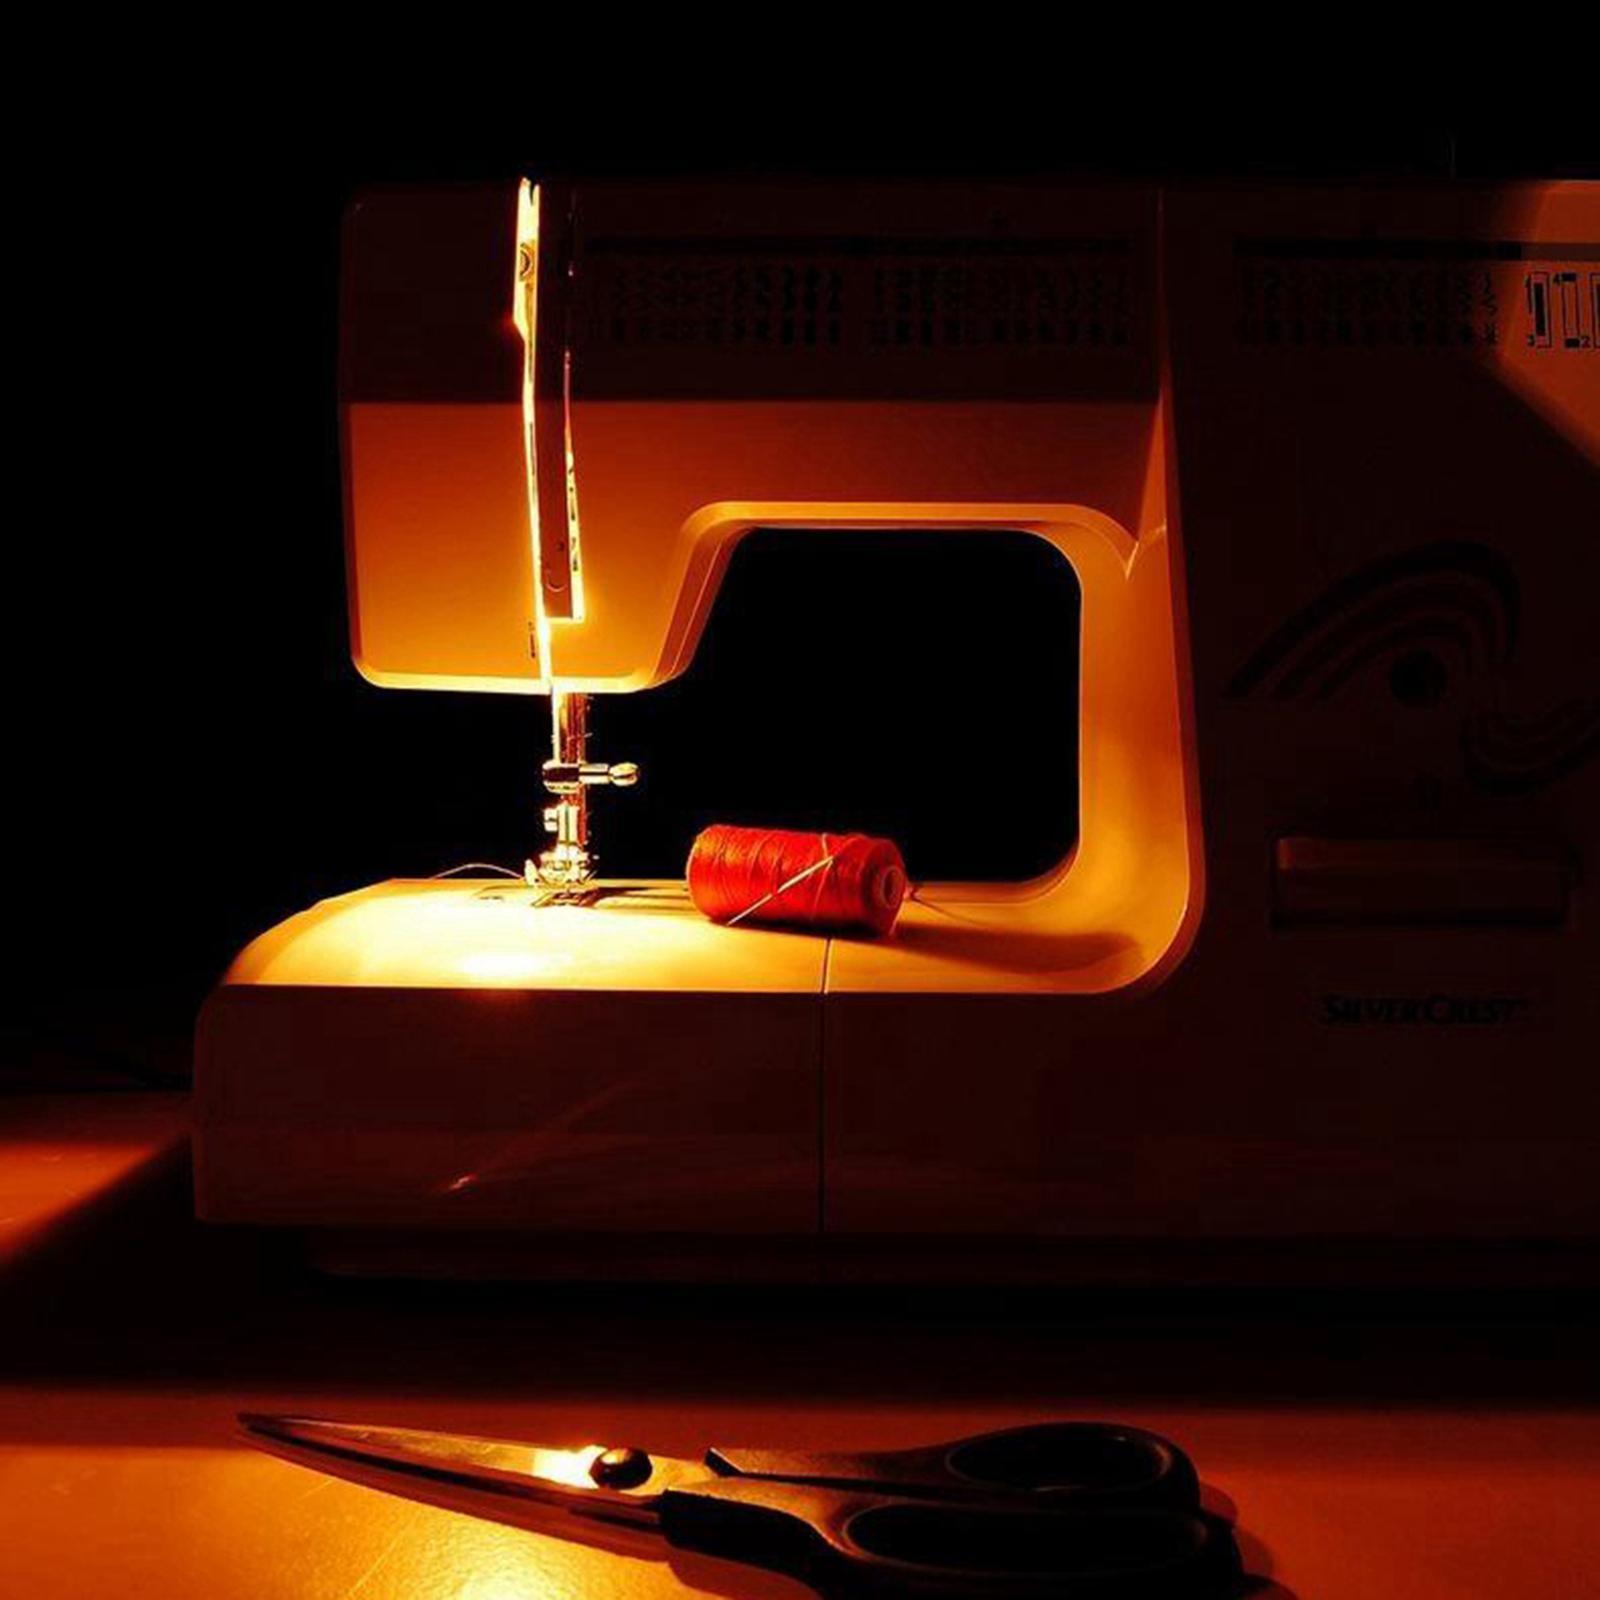 Sewing Machine Light Gooseneck Light Sewing Machine Working Light Drill Press